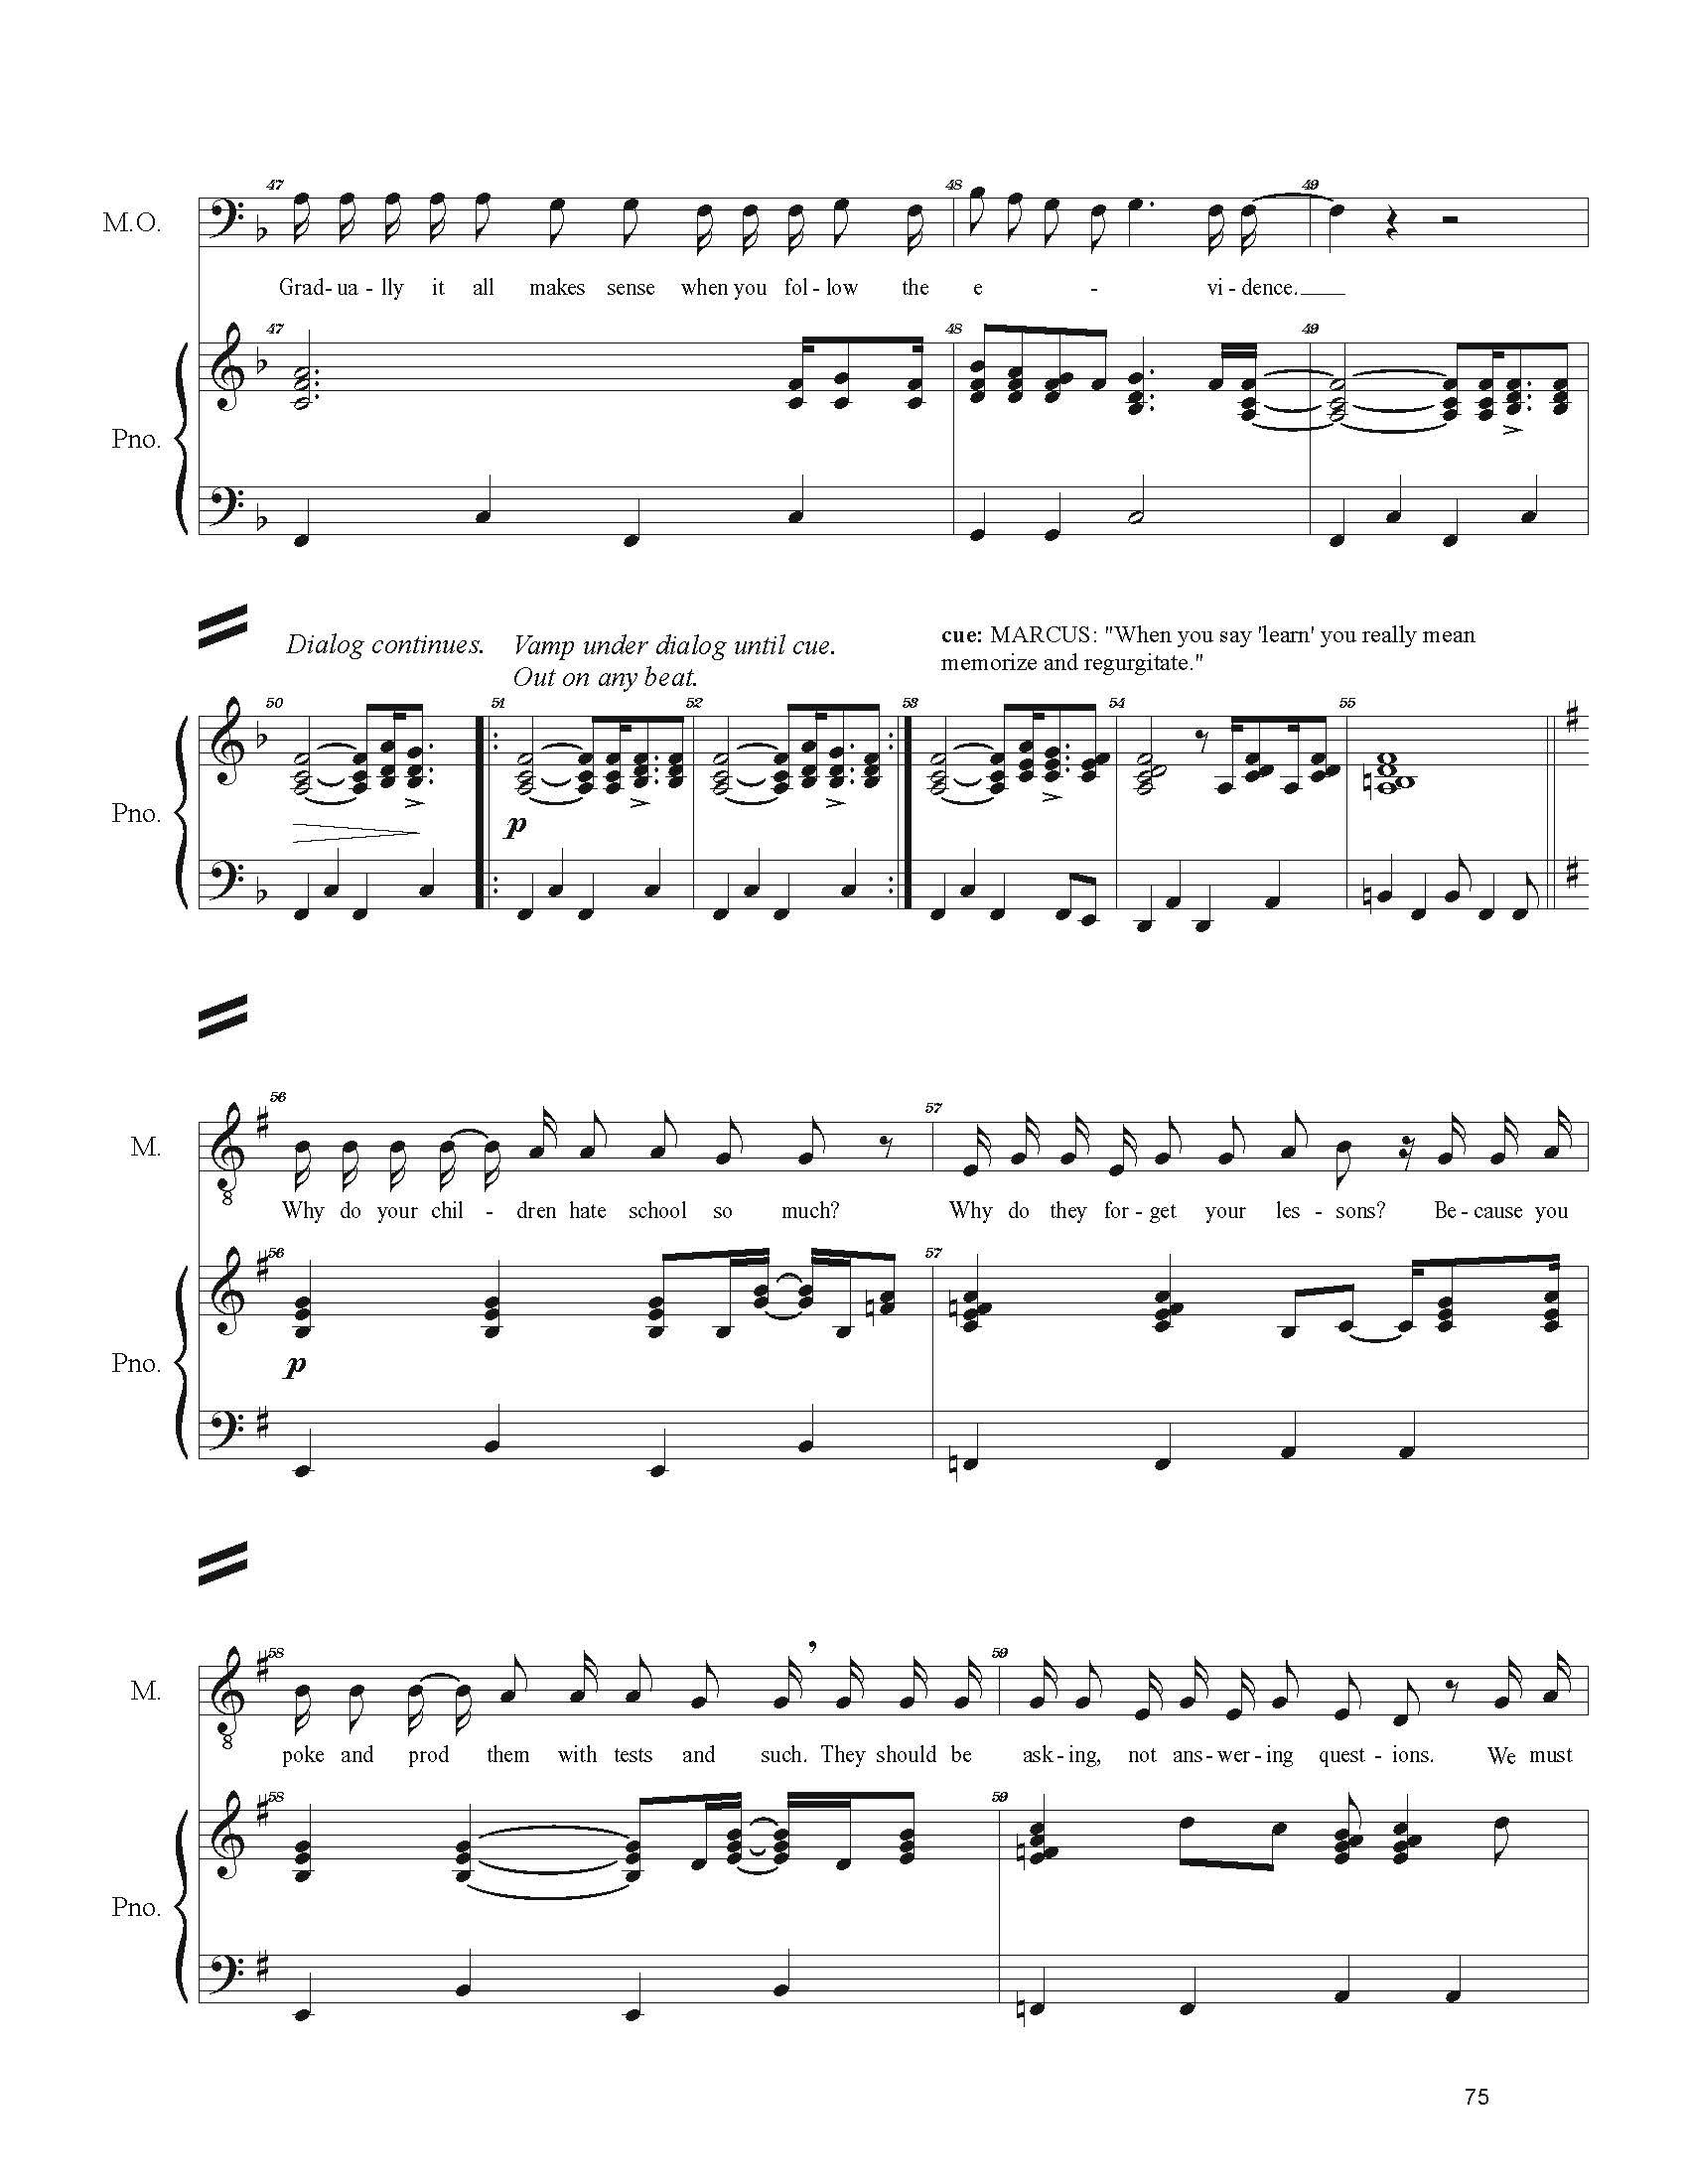 FULL PIANO VOCAL SCORE DRAFT 1 - Score_Page_075.jpg